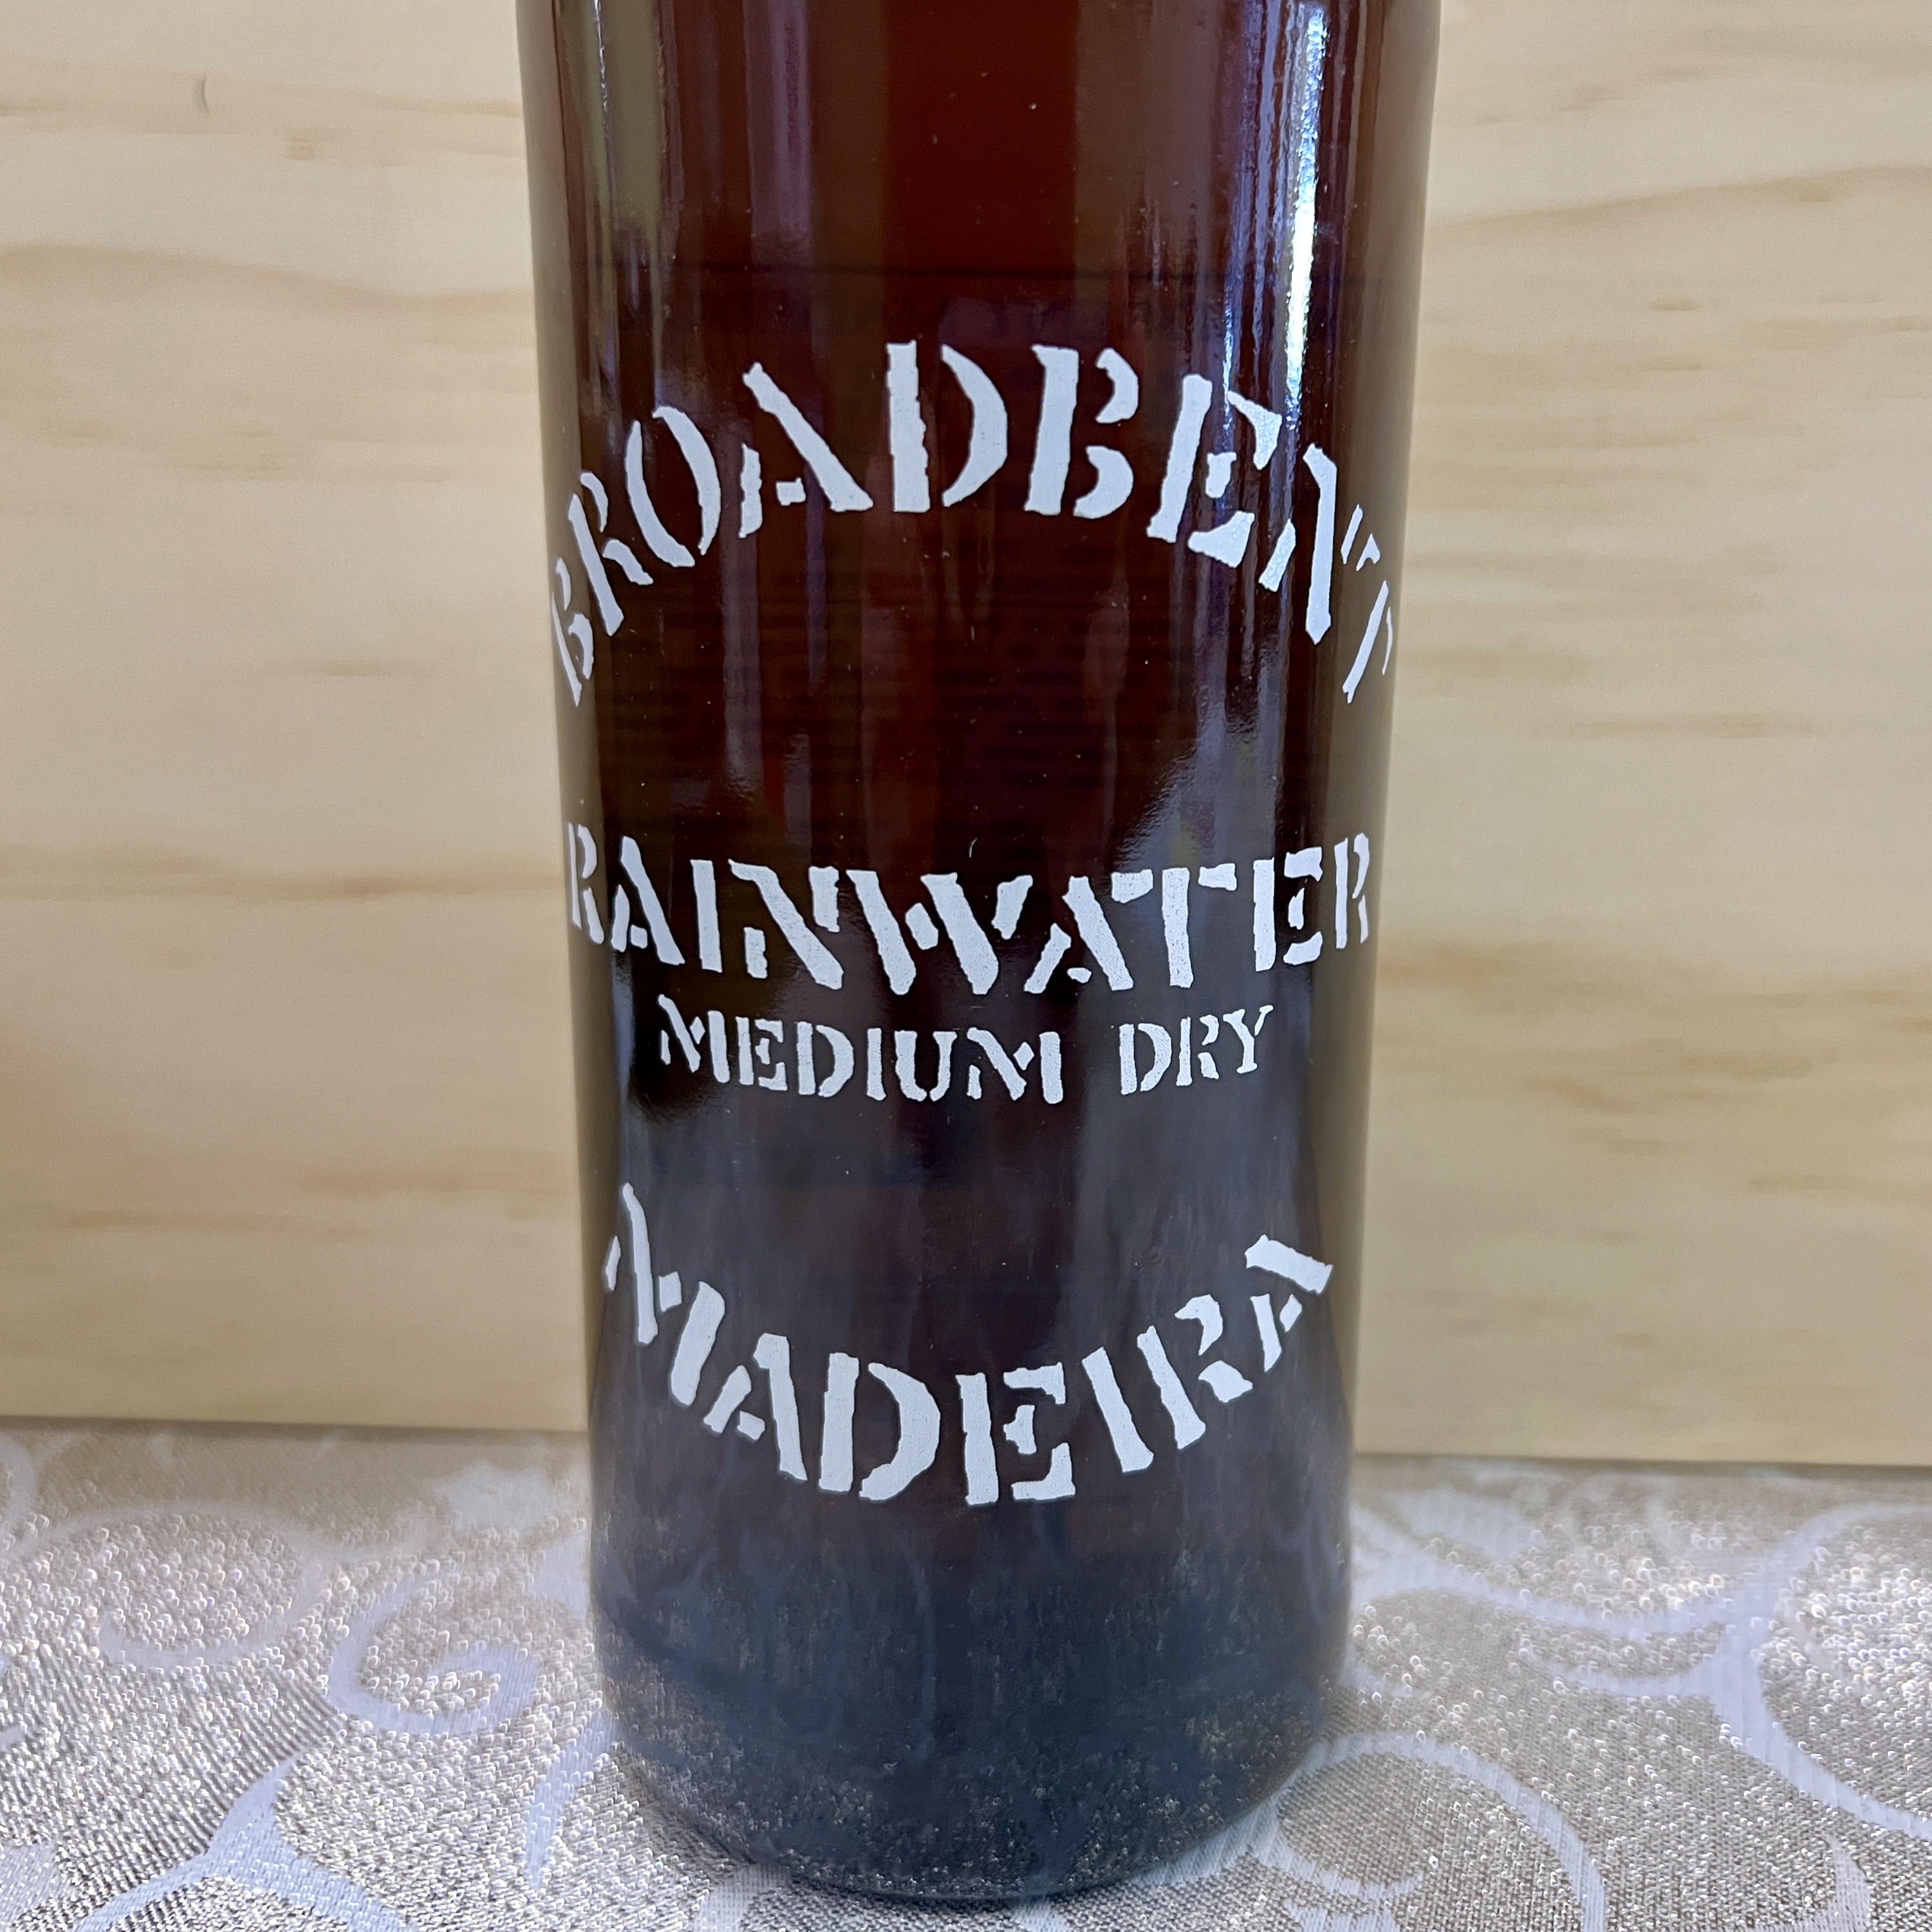 Broadbent Rainwater Madeira medium dry